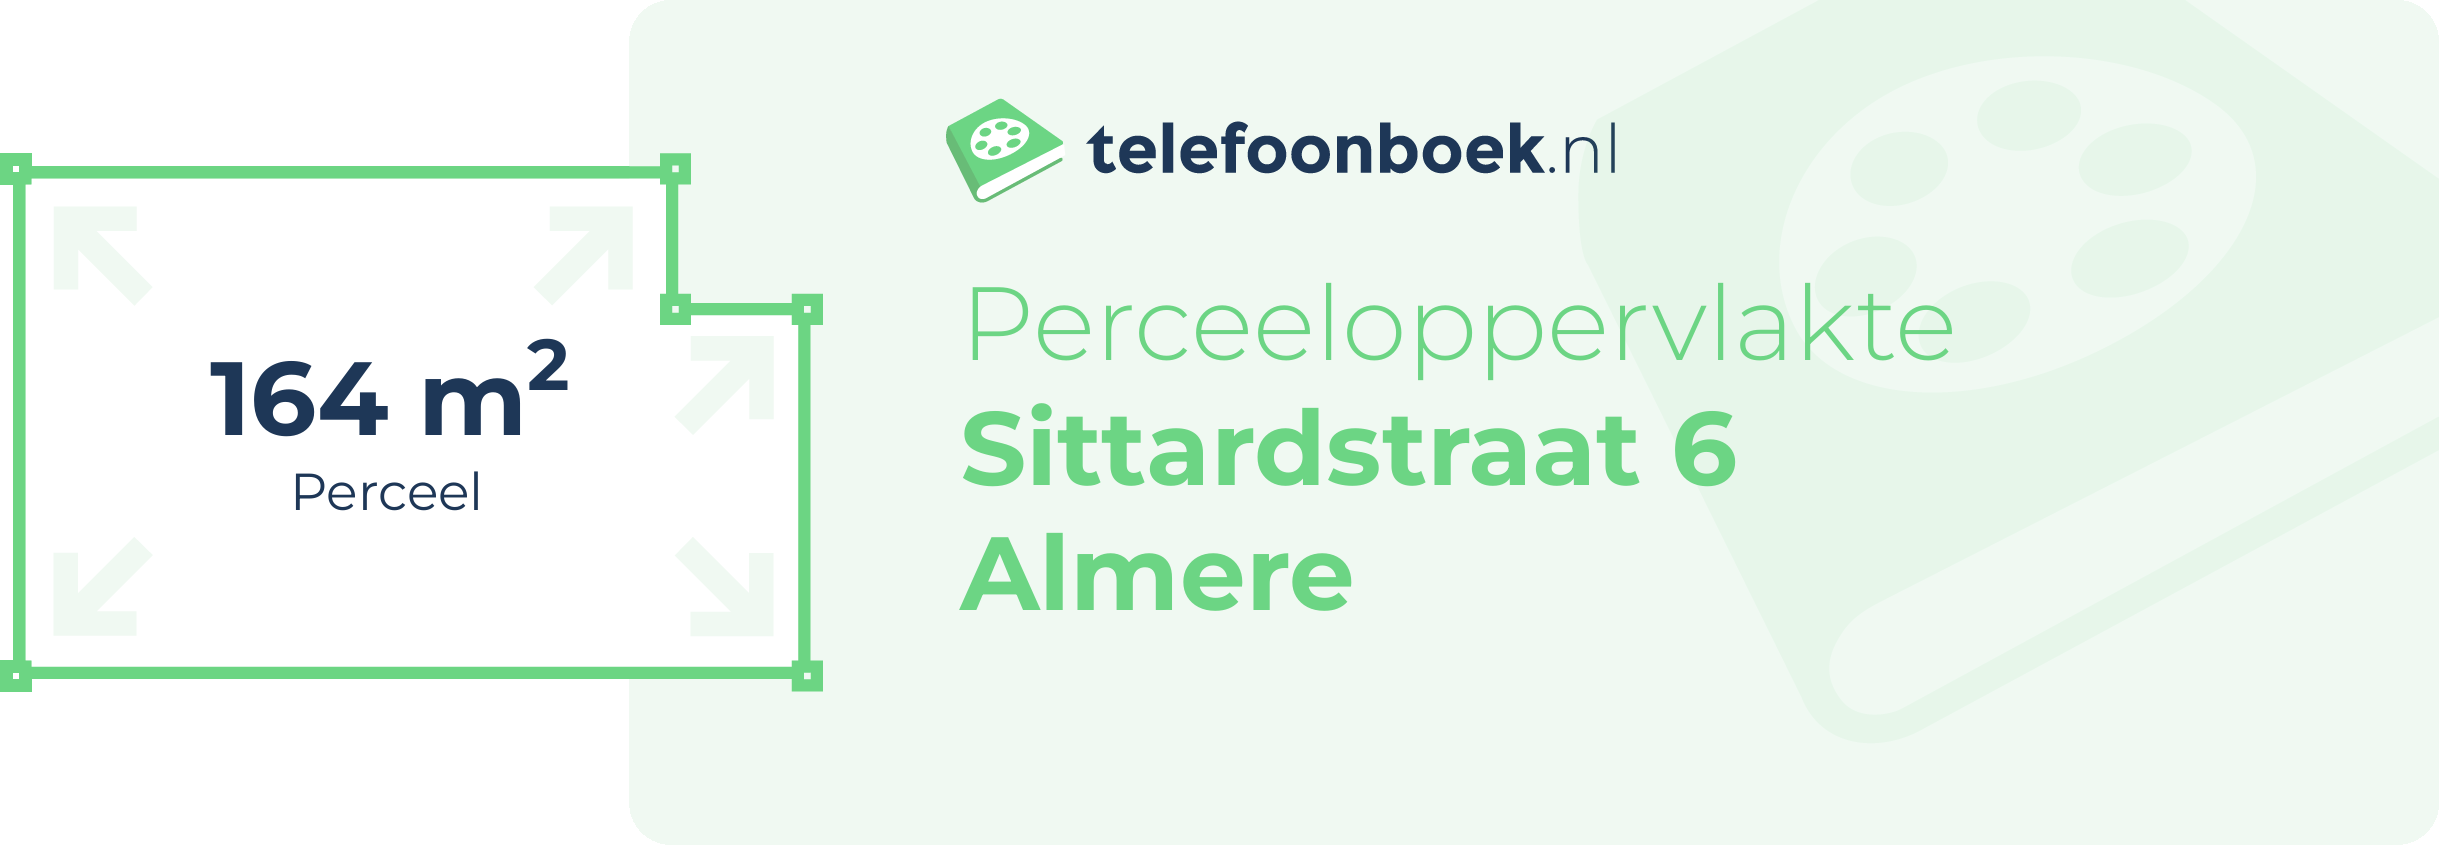 Perceeloppervlakte Sittardstraat 6 Almere